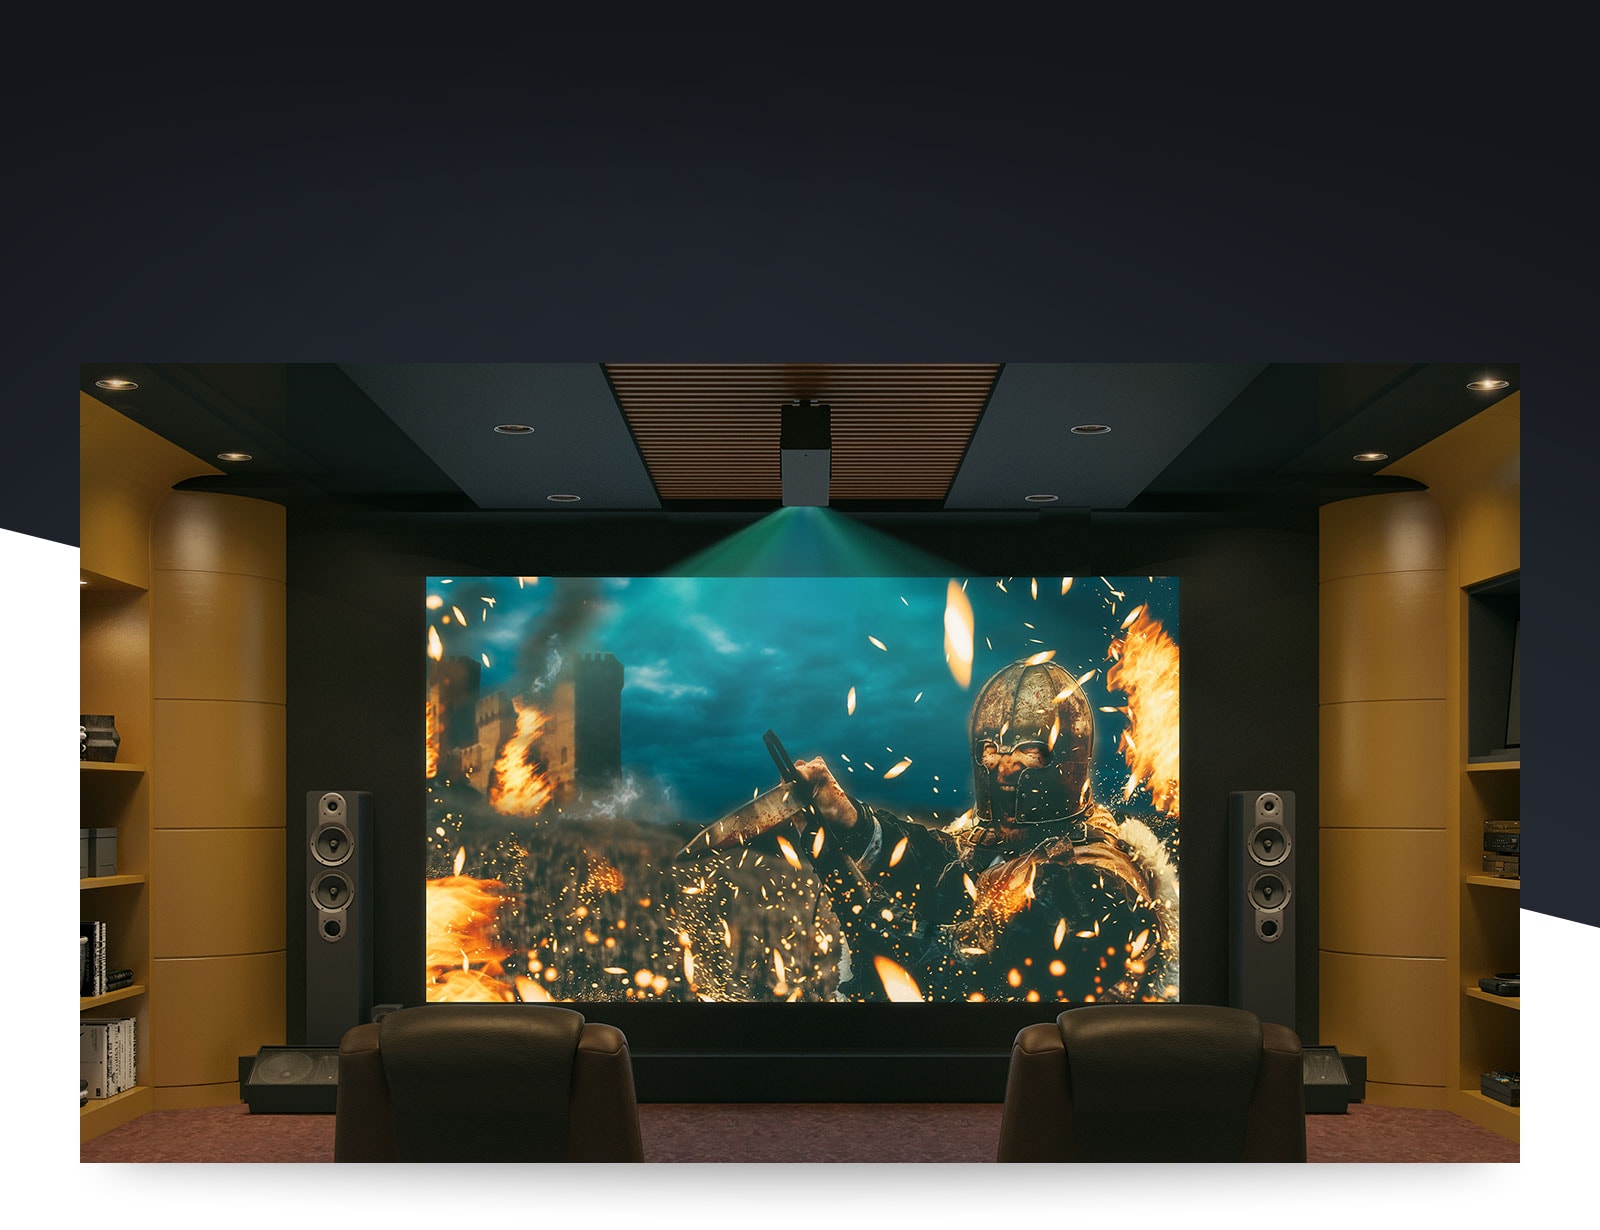 LG HU80KA 4K UHD Laser Smart Home Theater CineBeam Up to 150” screen size HDR 10